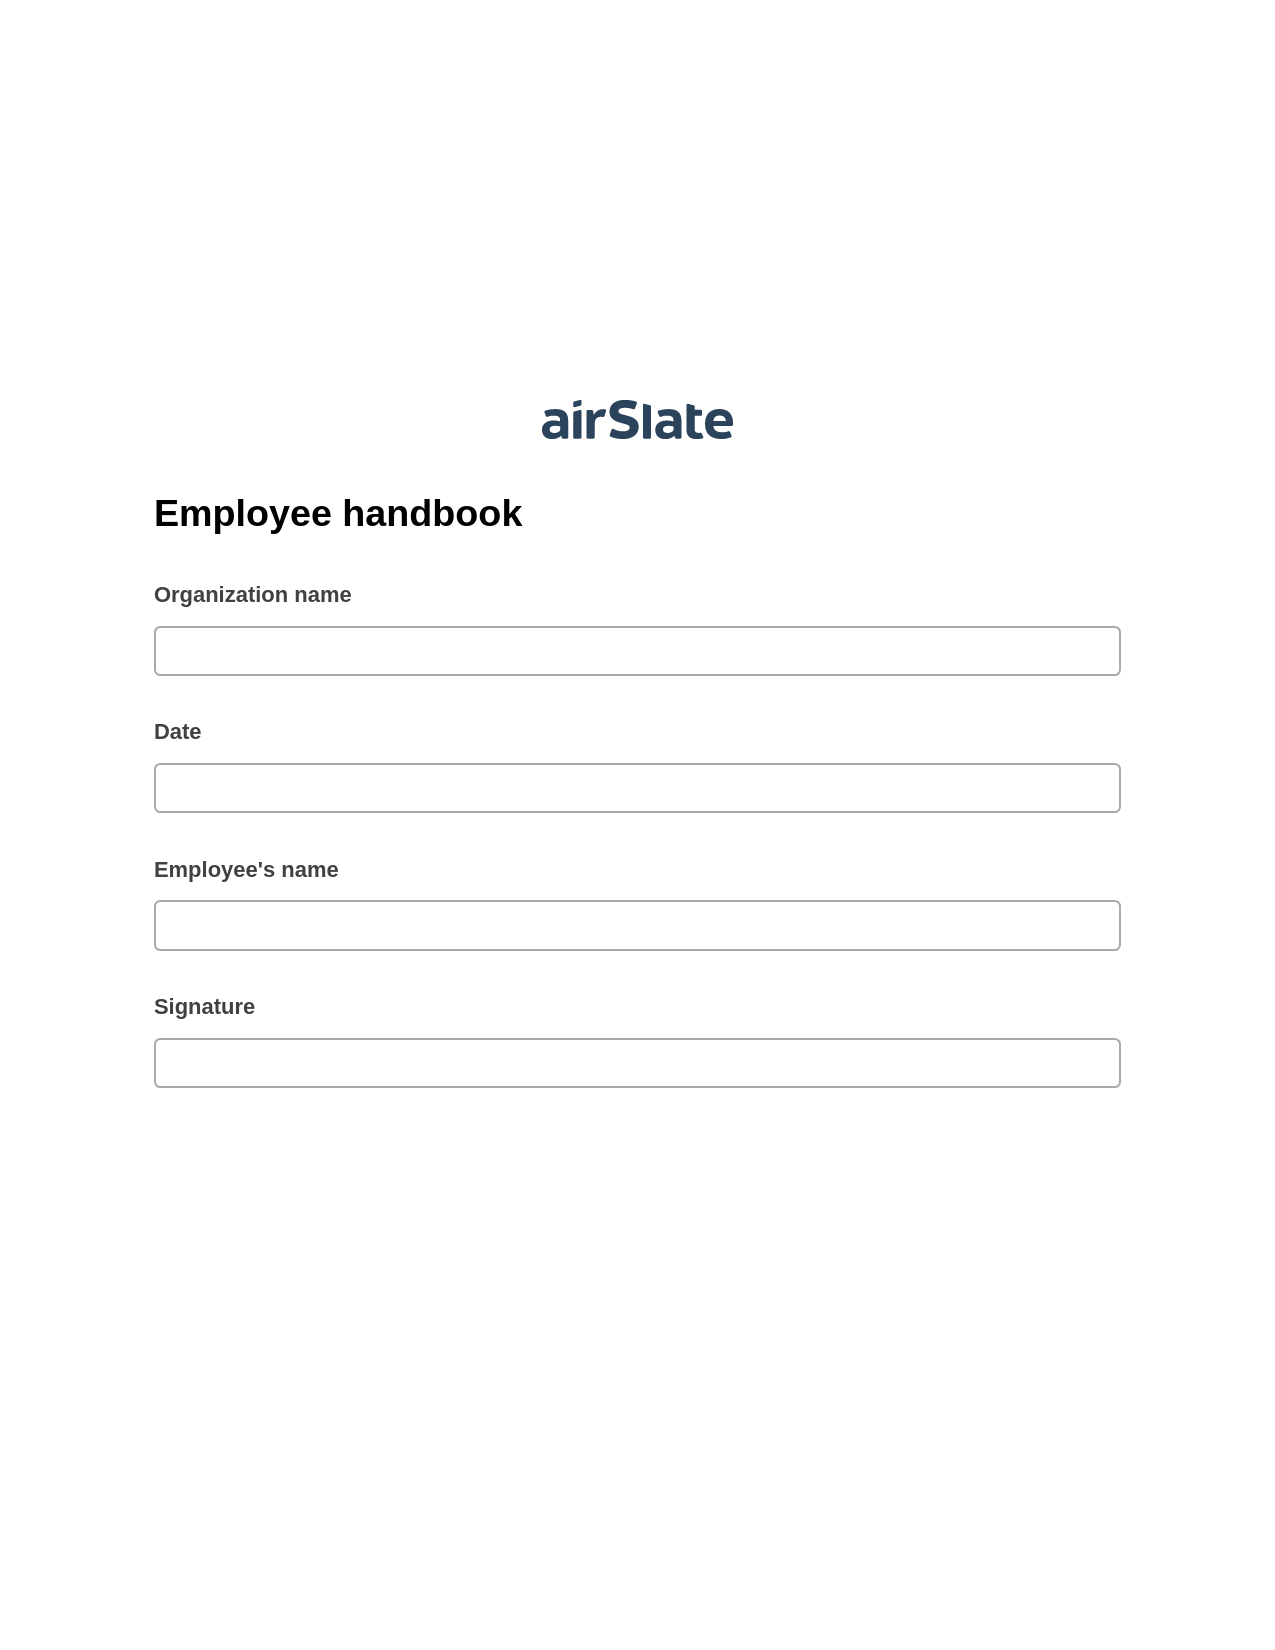 Employee handbook Pre-fill from Google Sheets Bot, Update Salesforce Record Bot, Box Bot